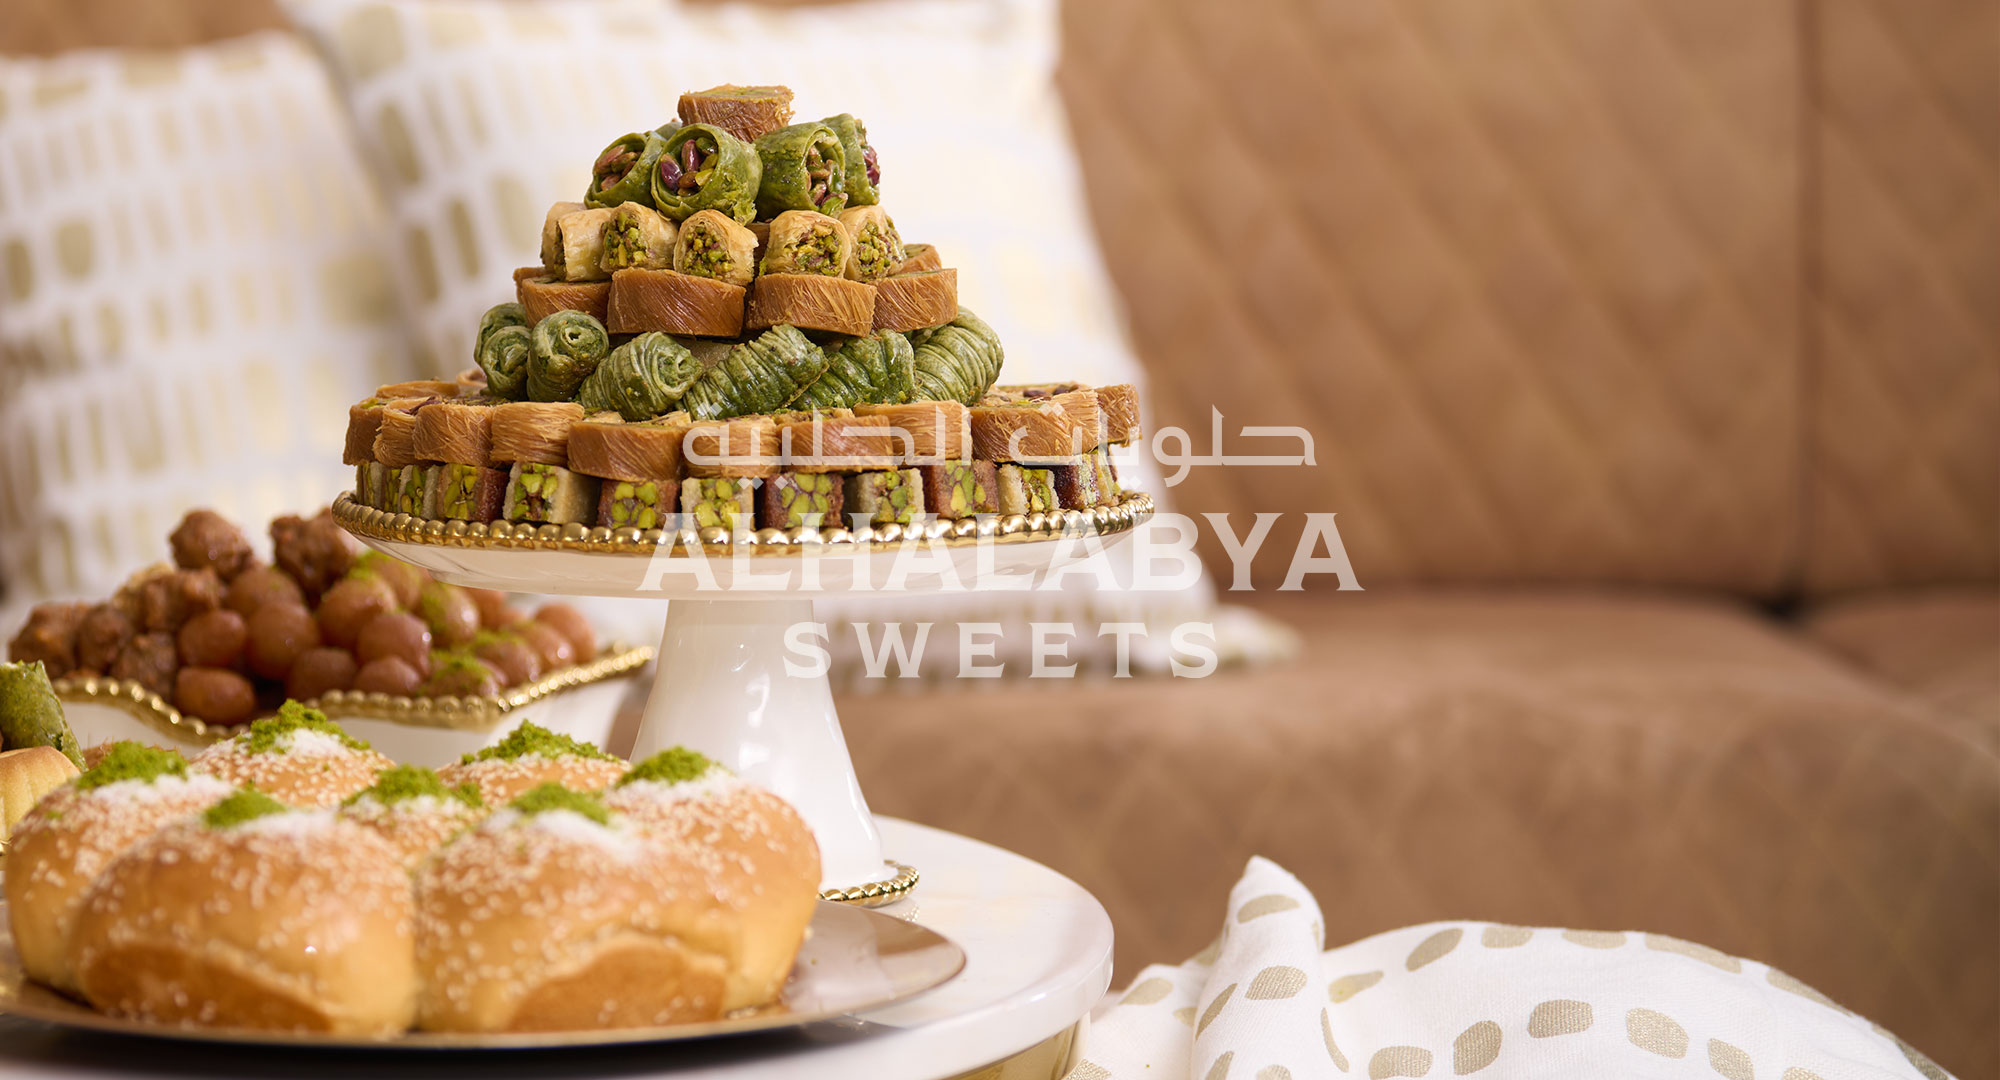 How Al Halabya Sweets Enhances Every Occasion